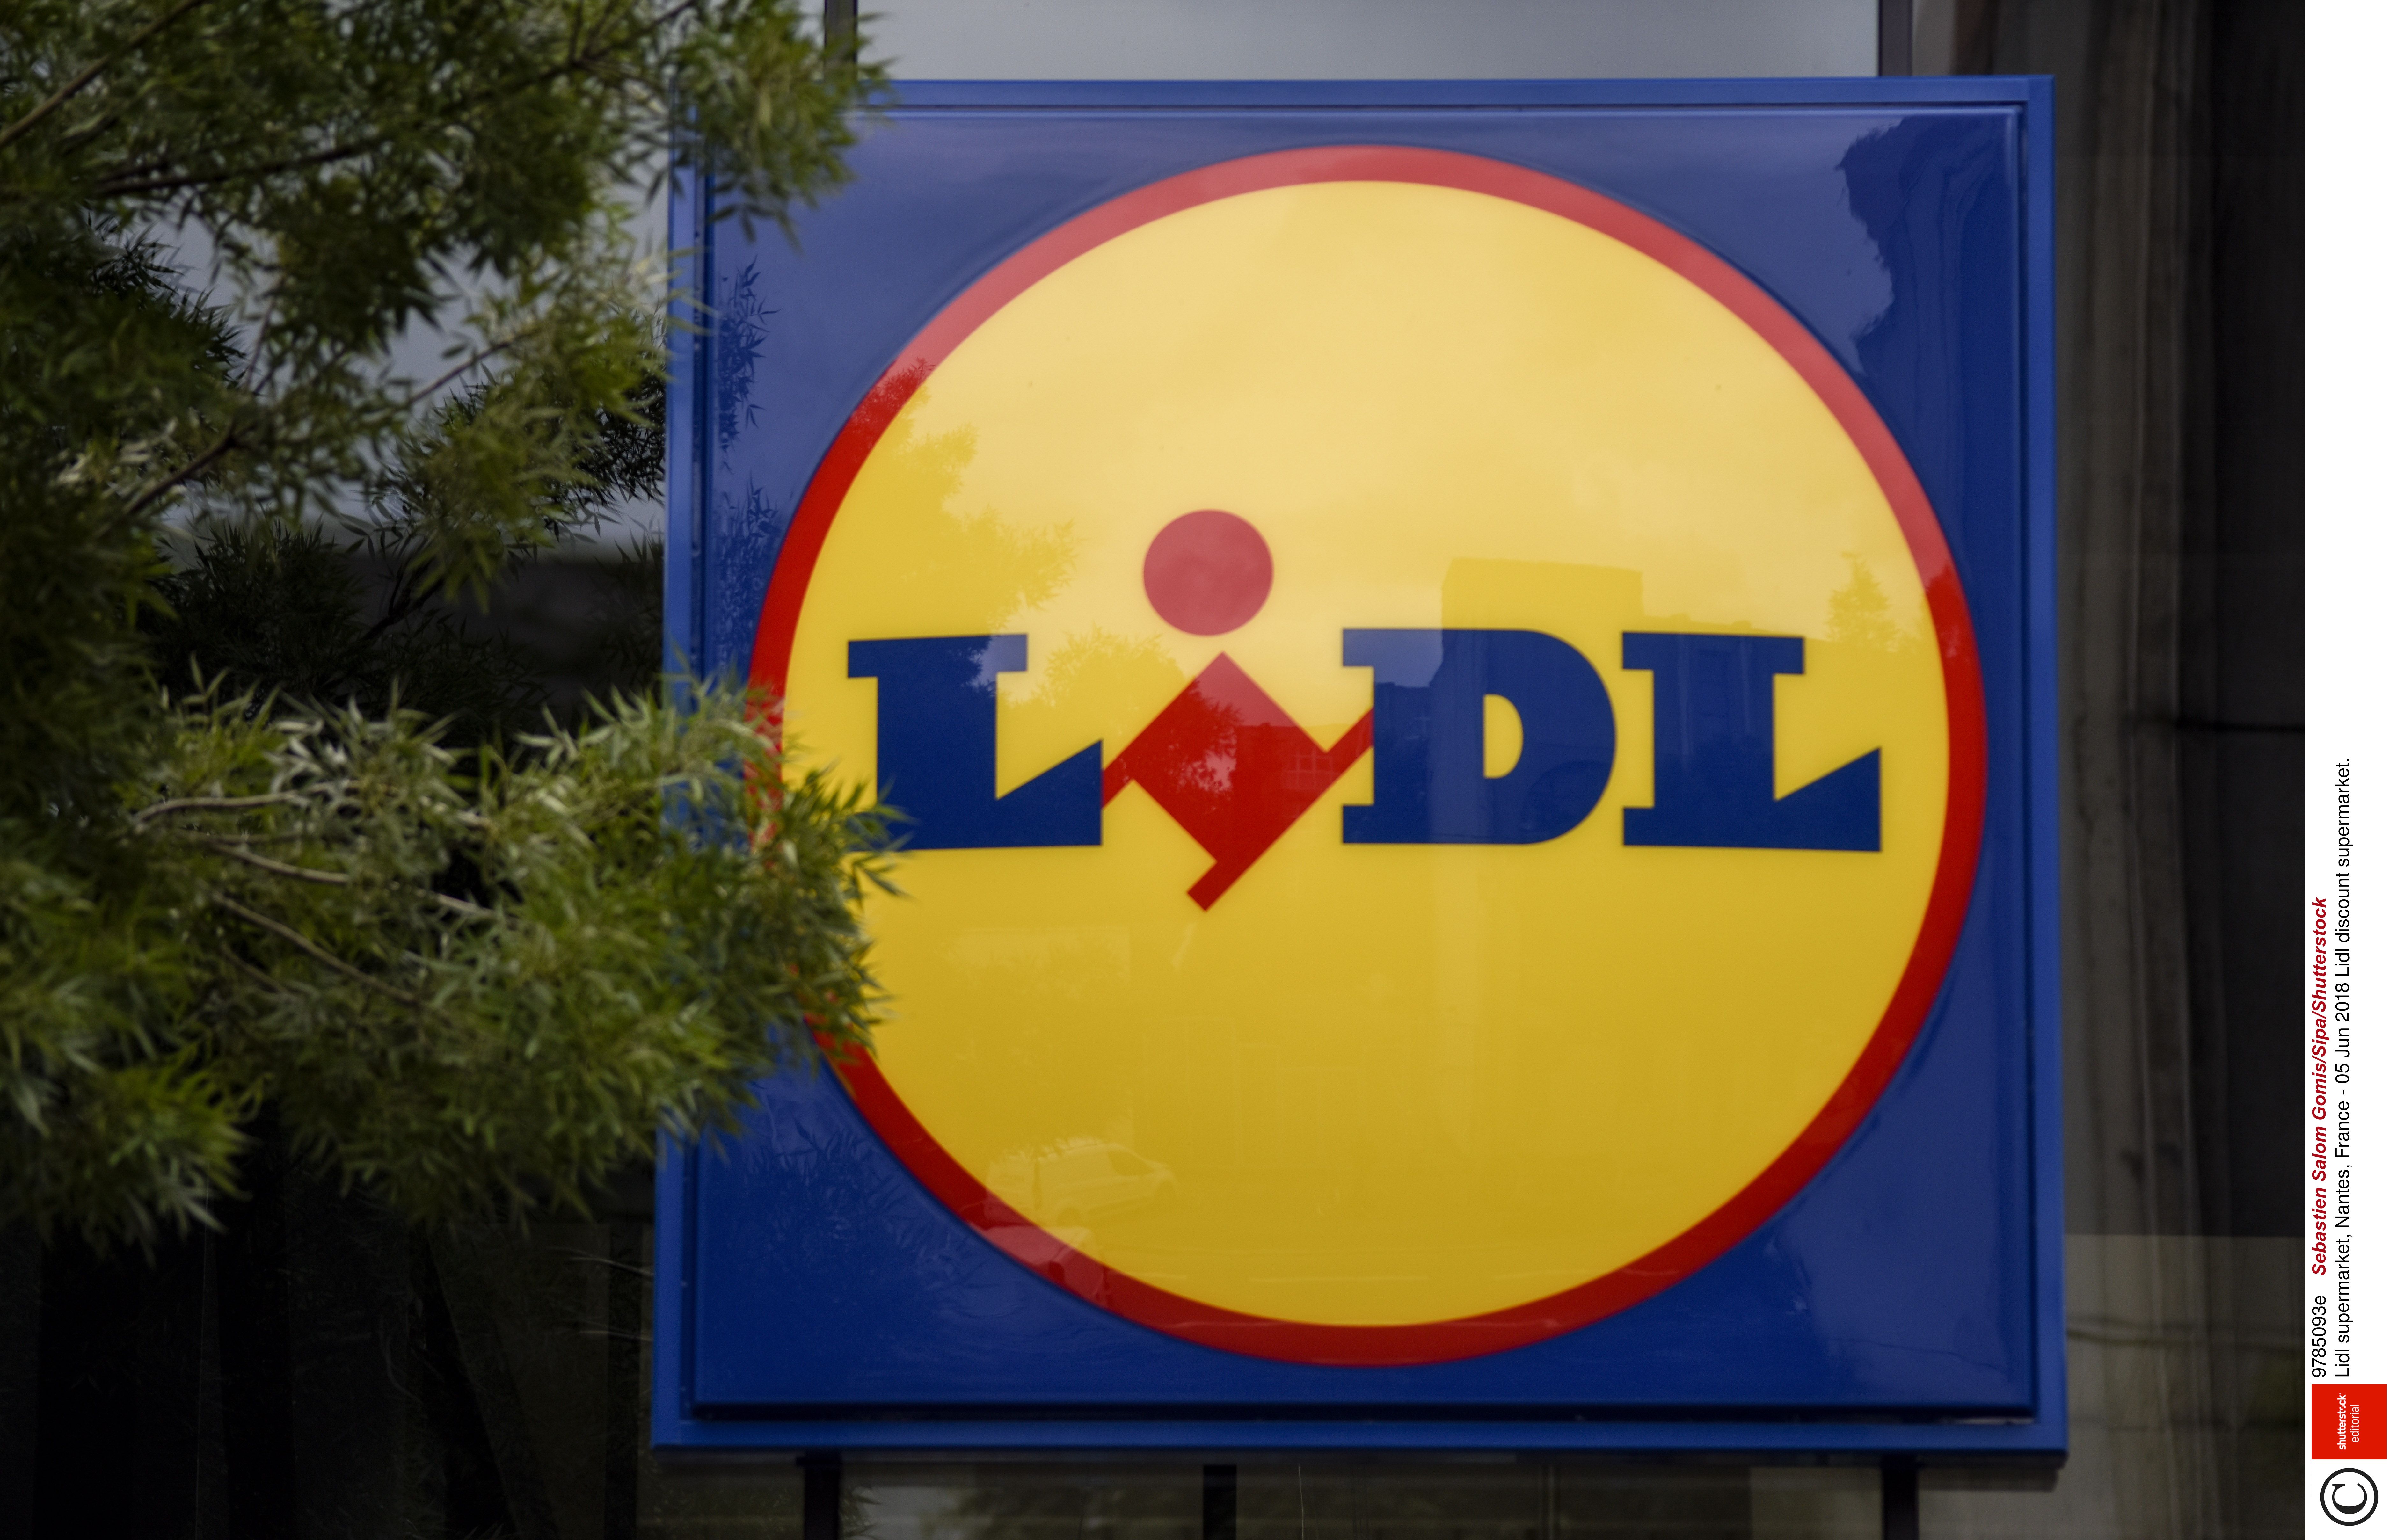 Kingston residents take down supermarket giant Lidl